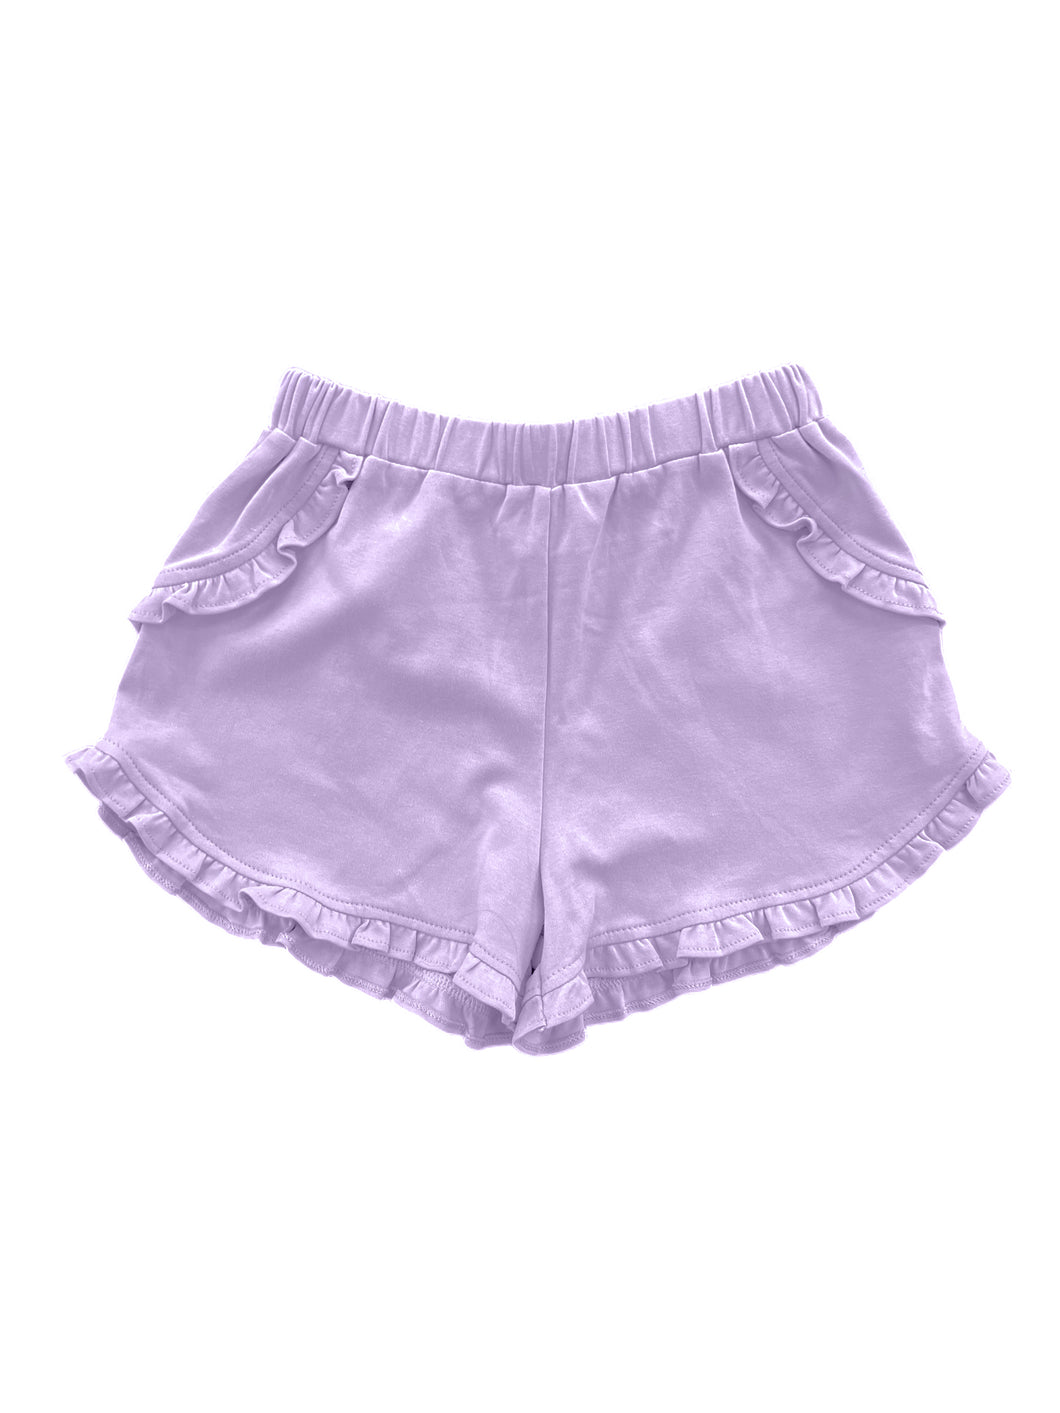 Kinley Ruffled Knit Pima Shorts, Lavender